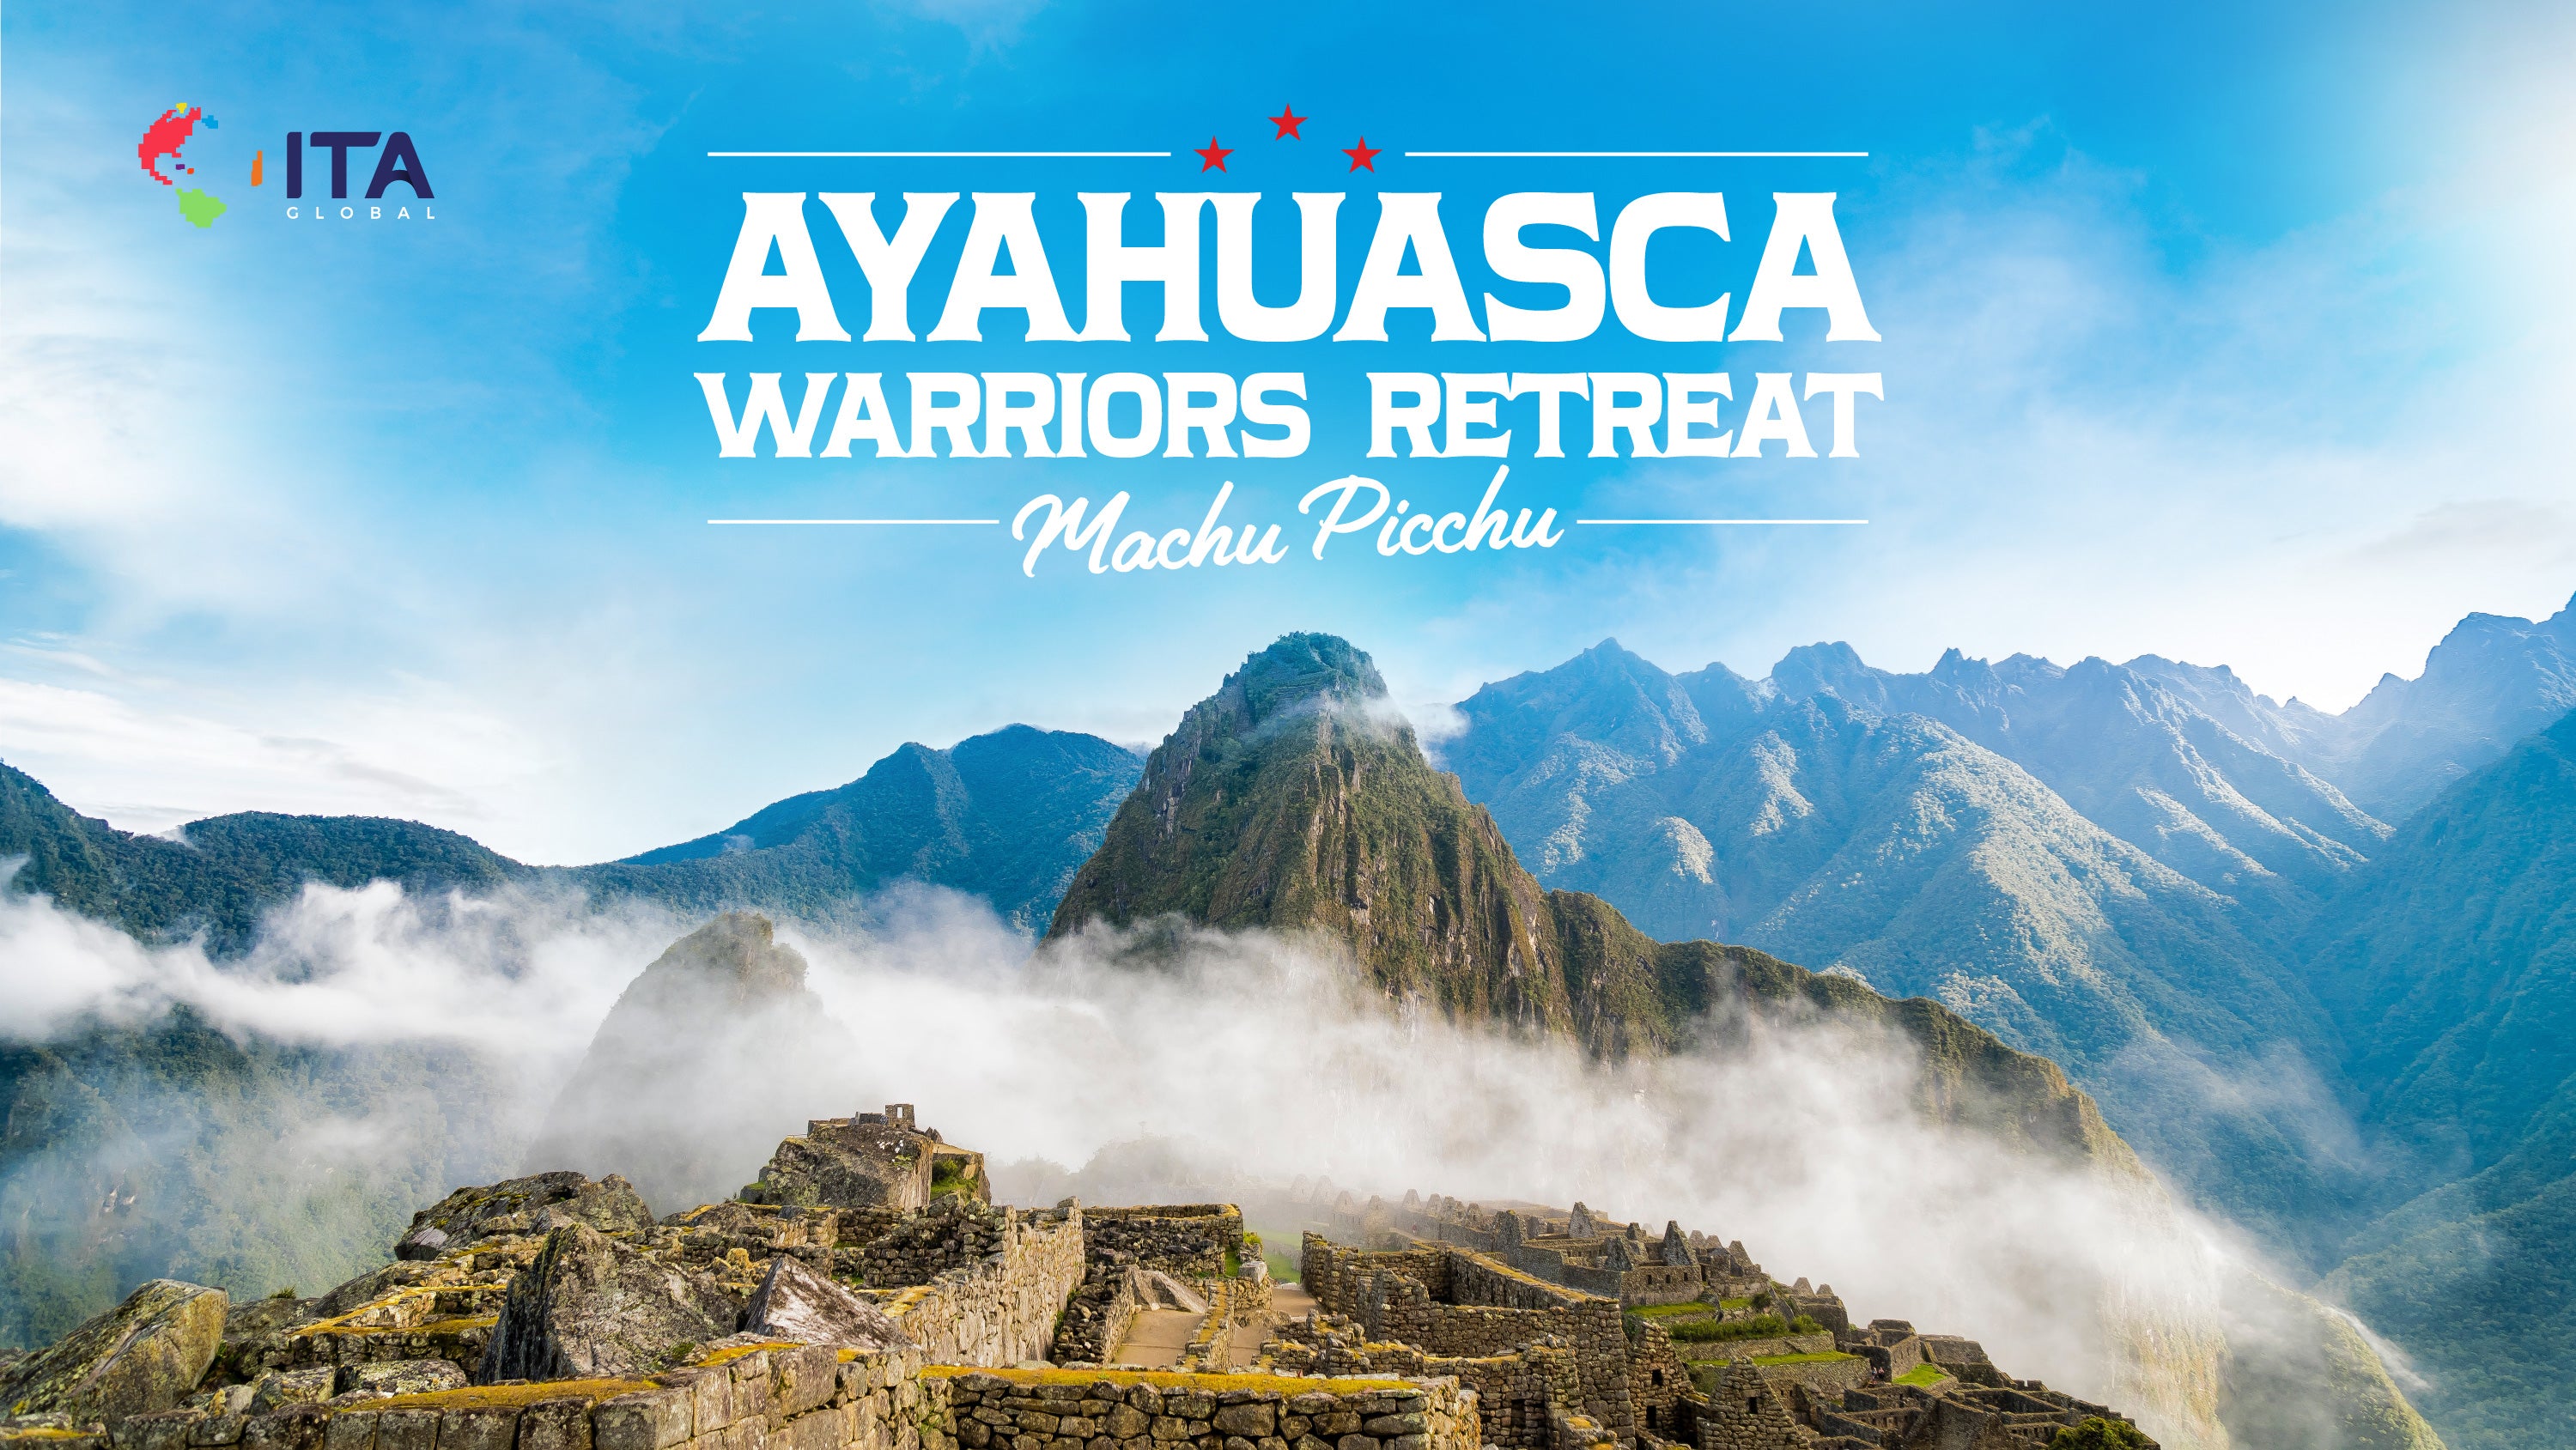 Ayahuasca-Warriors-Retreat-slide